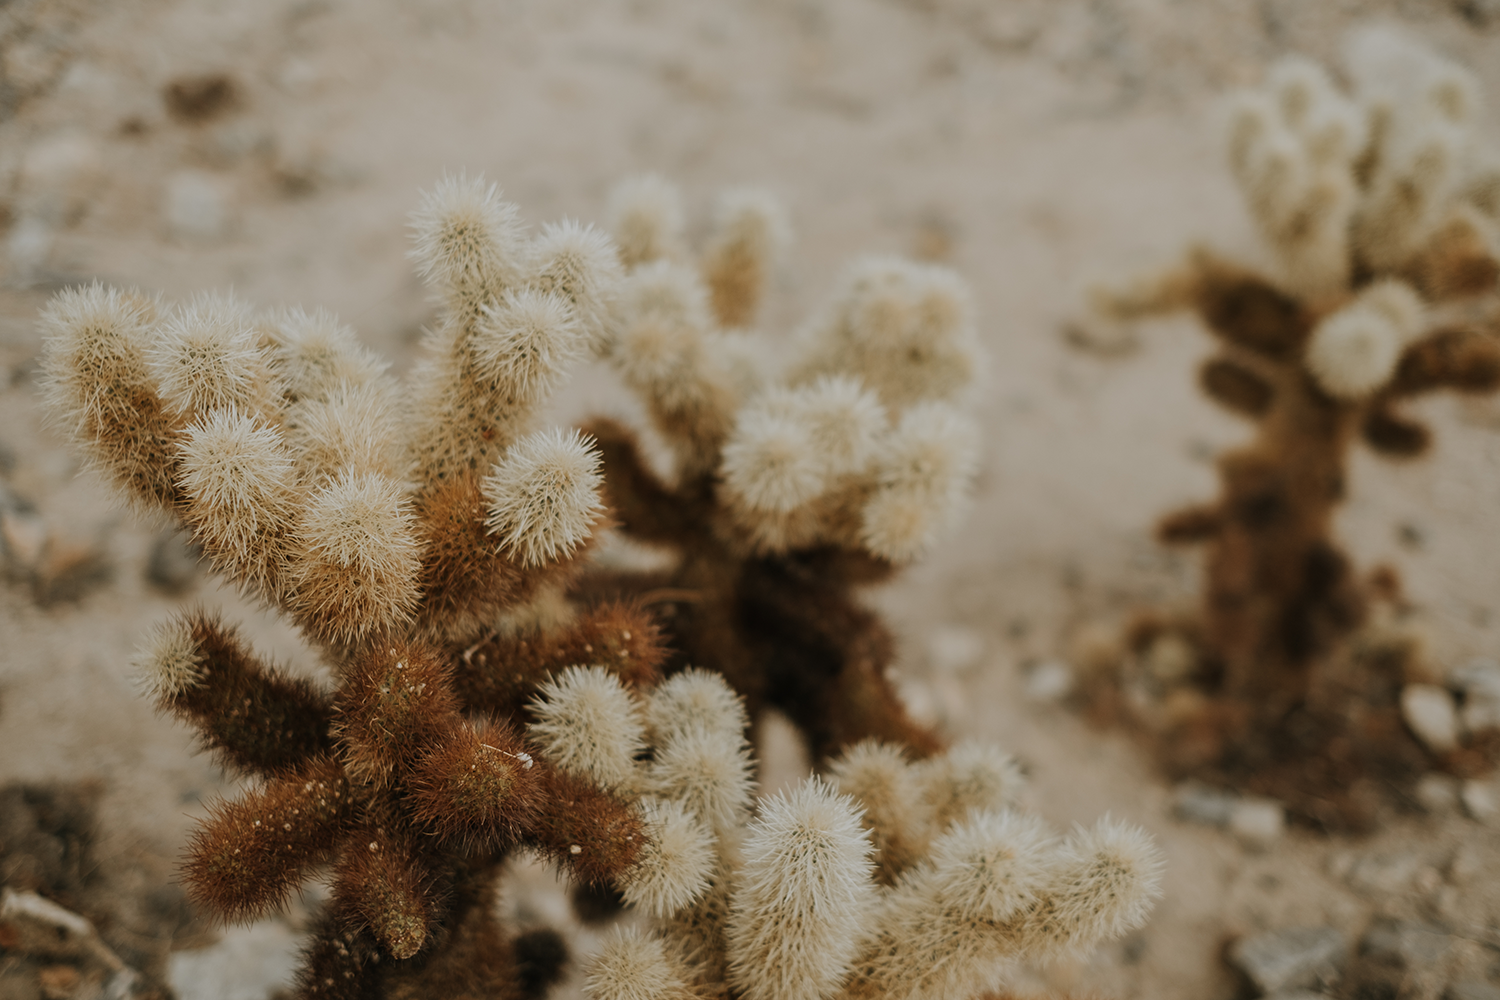 San Diego desert cactus